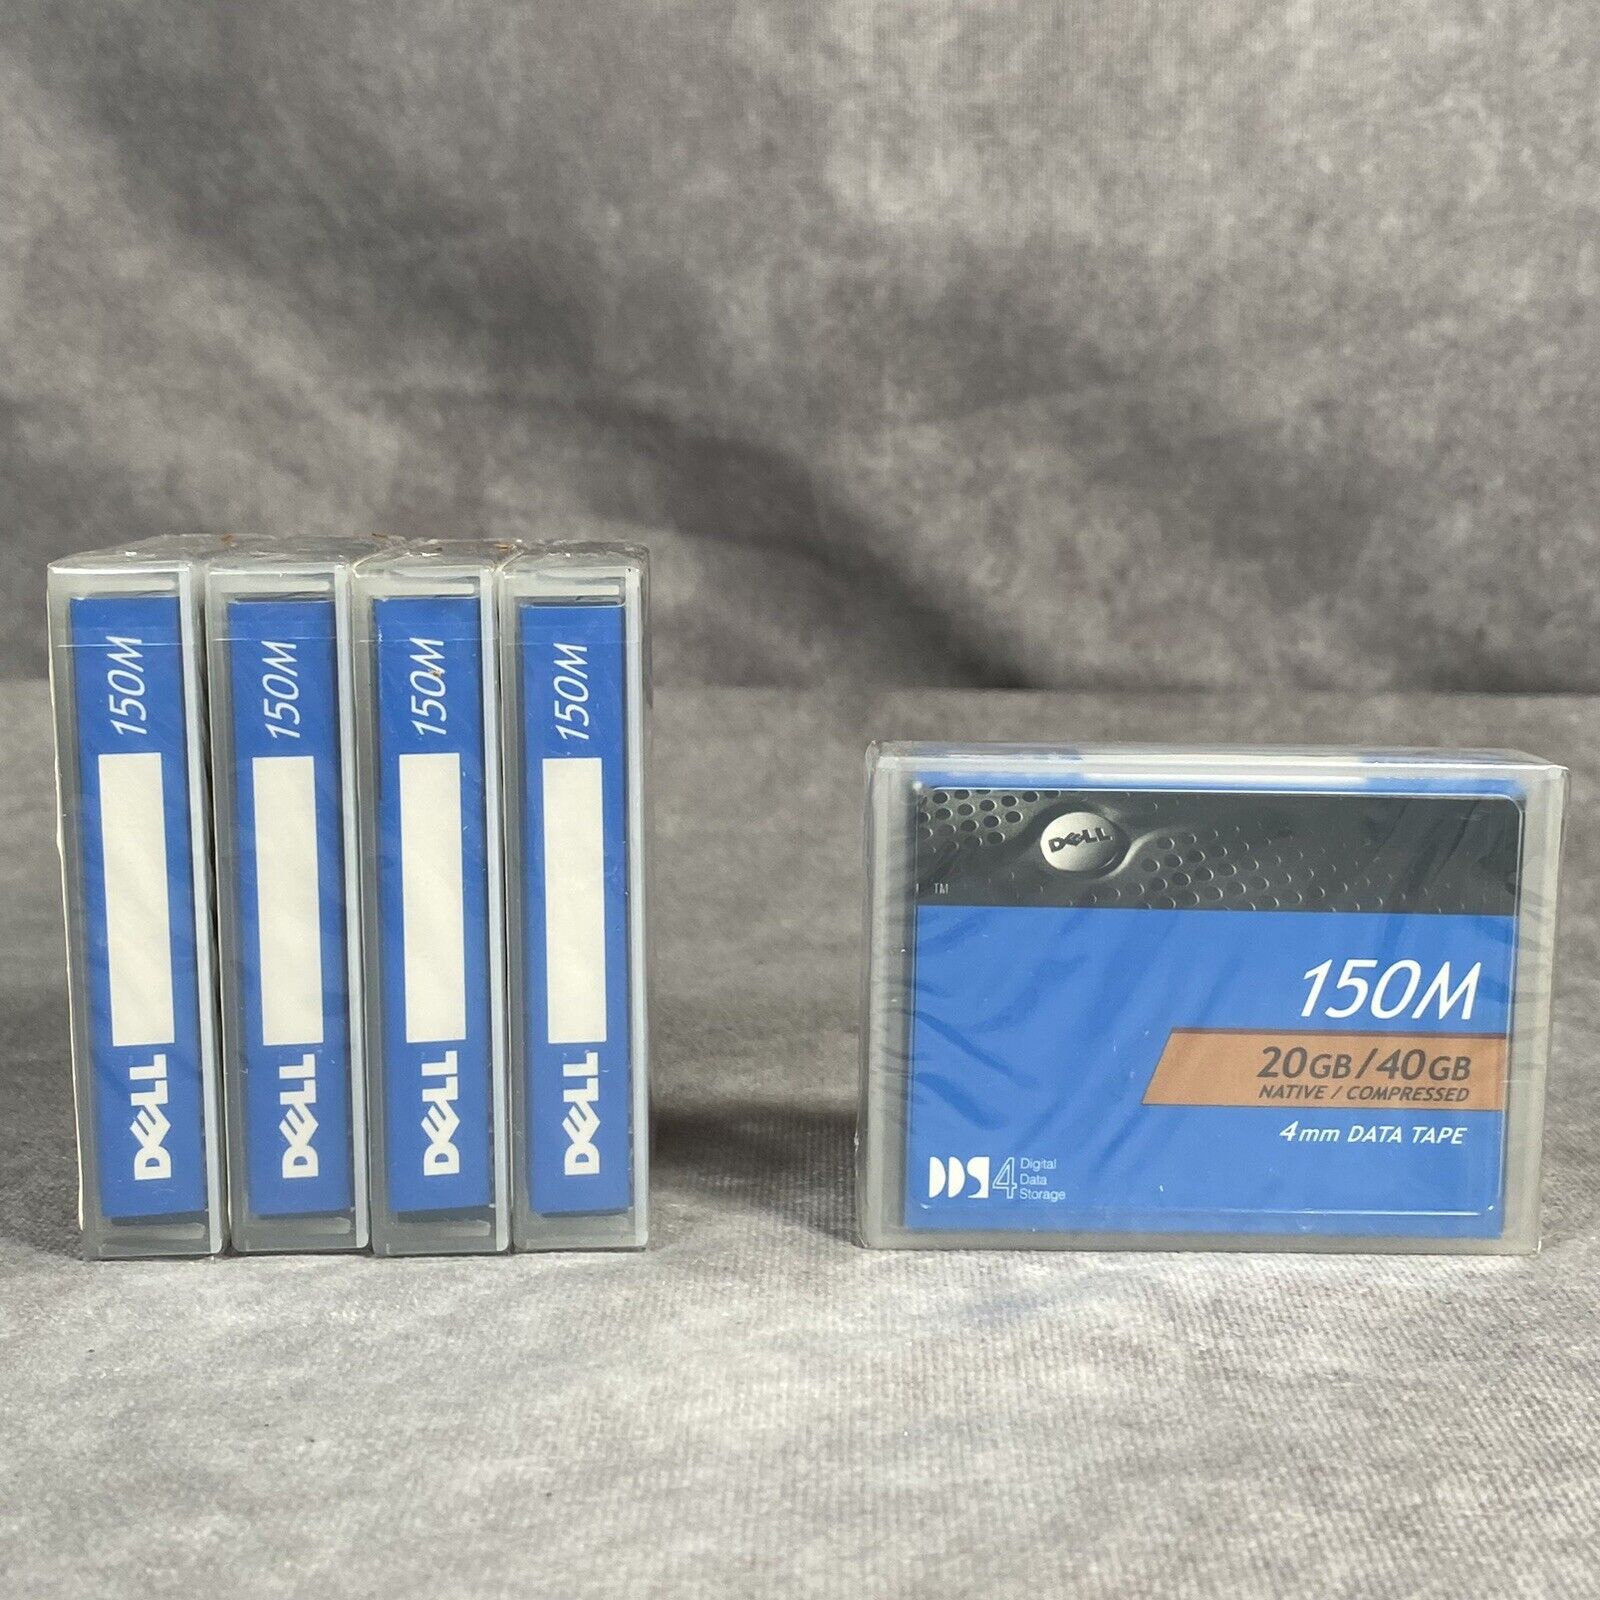 Dell 150M 20GB/40GB 4MM Data Tape Digital Data Storage New Sealed Pack of 5